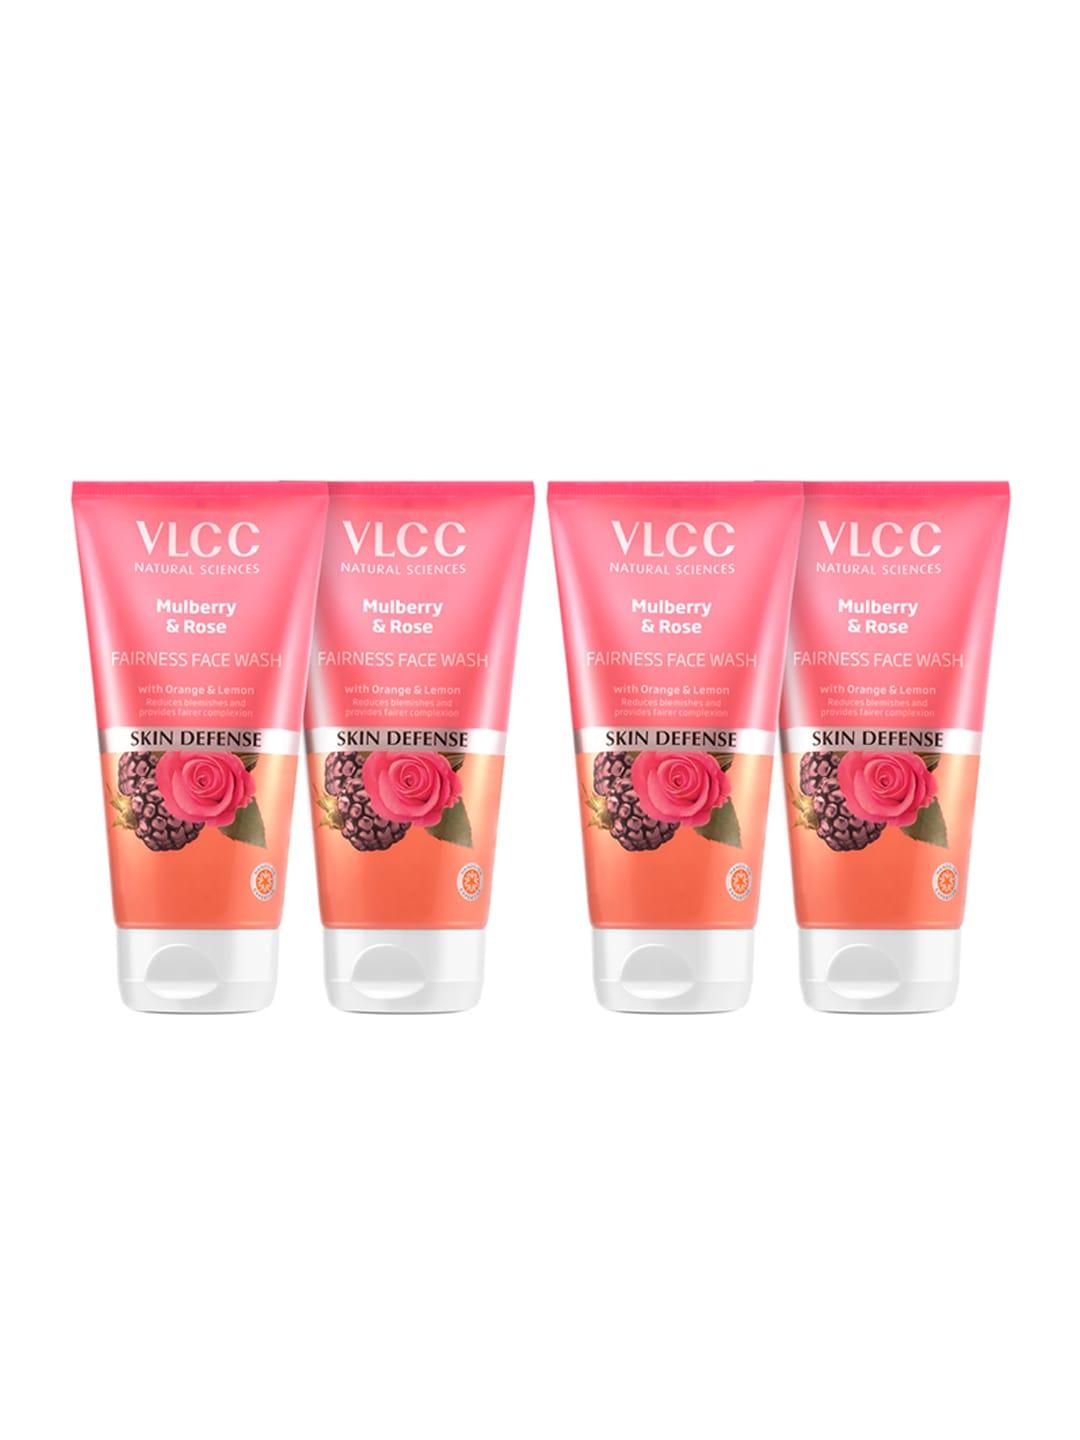 VLCC Set of 4 Skin Defense Mulberry & Rose Fairness Face Wash - 150ml Each